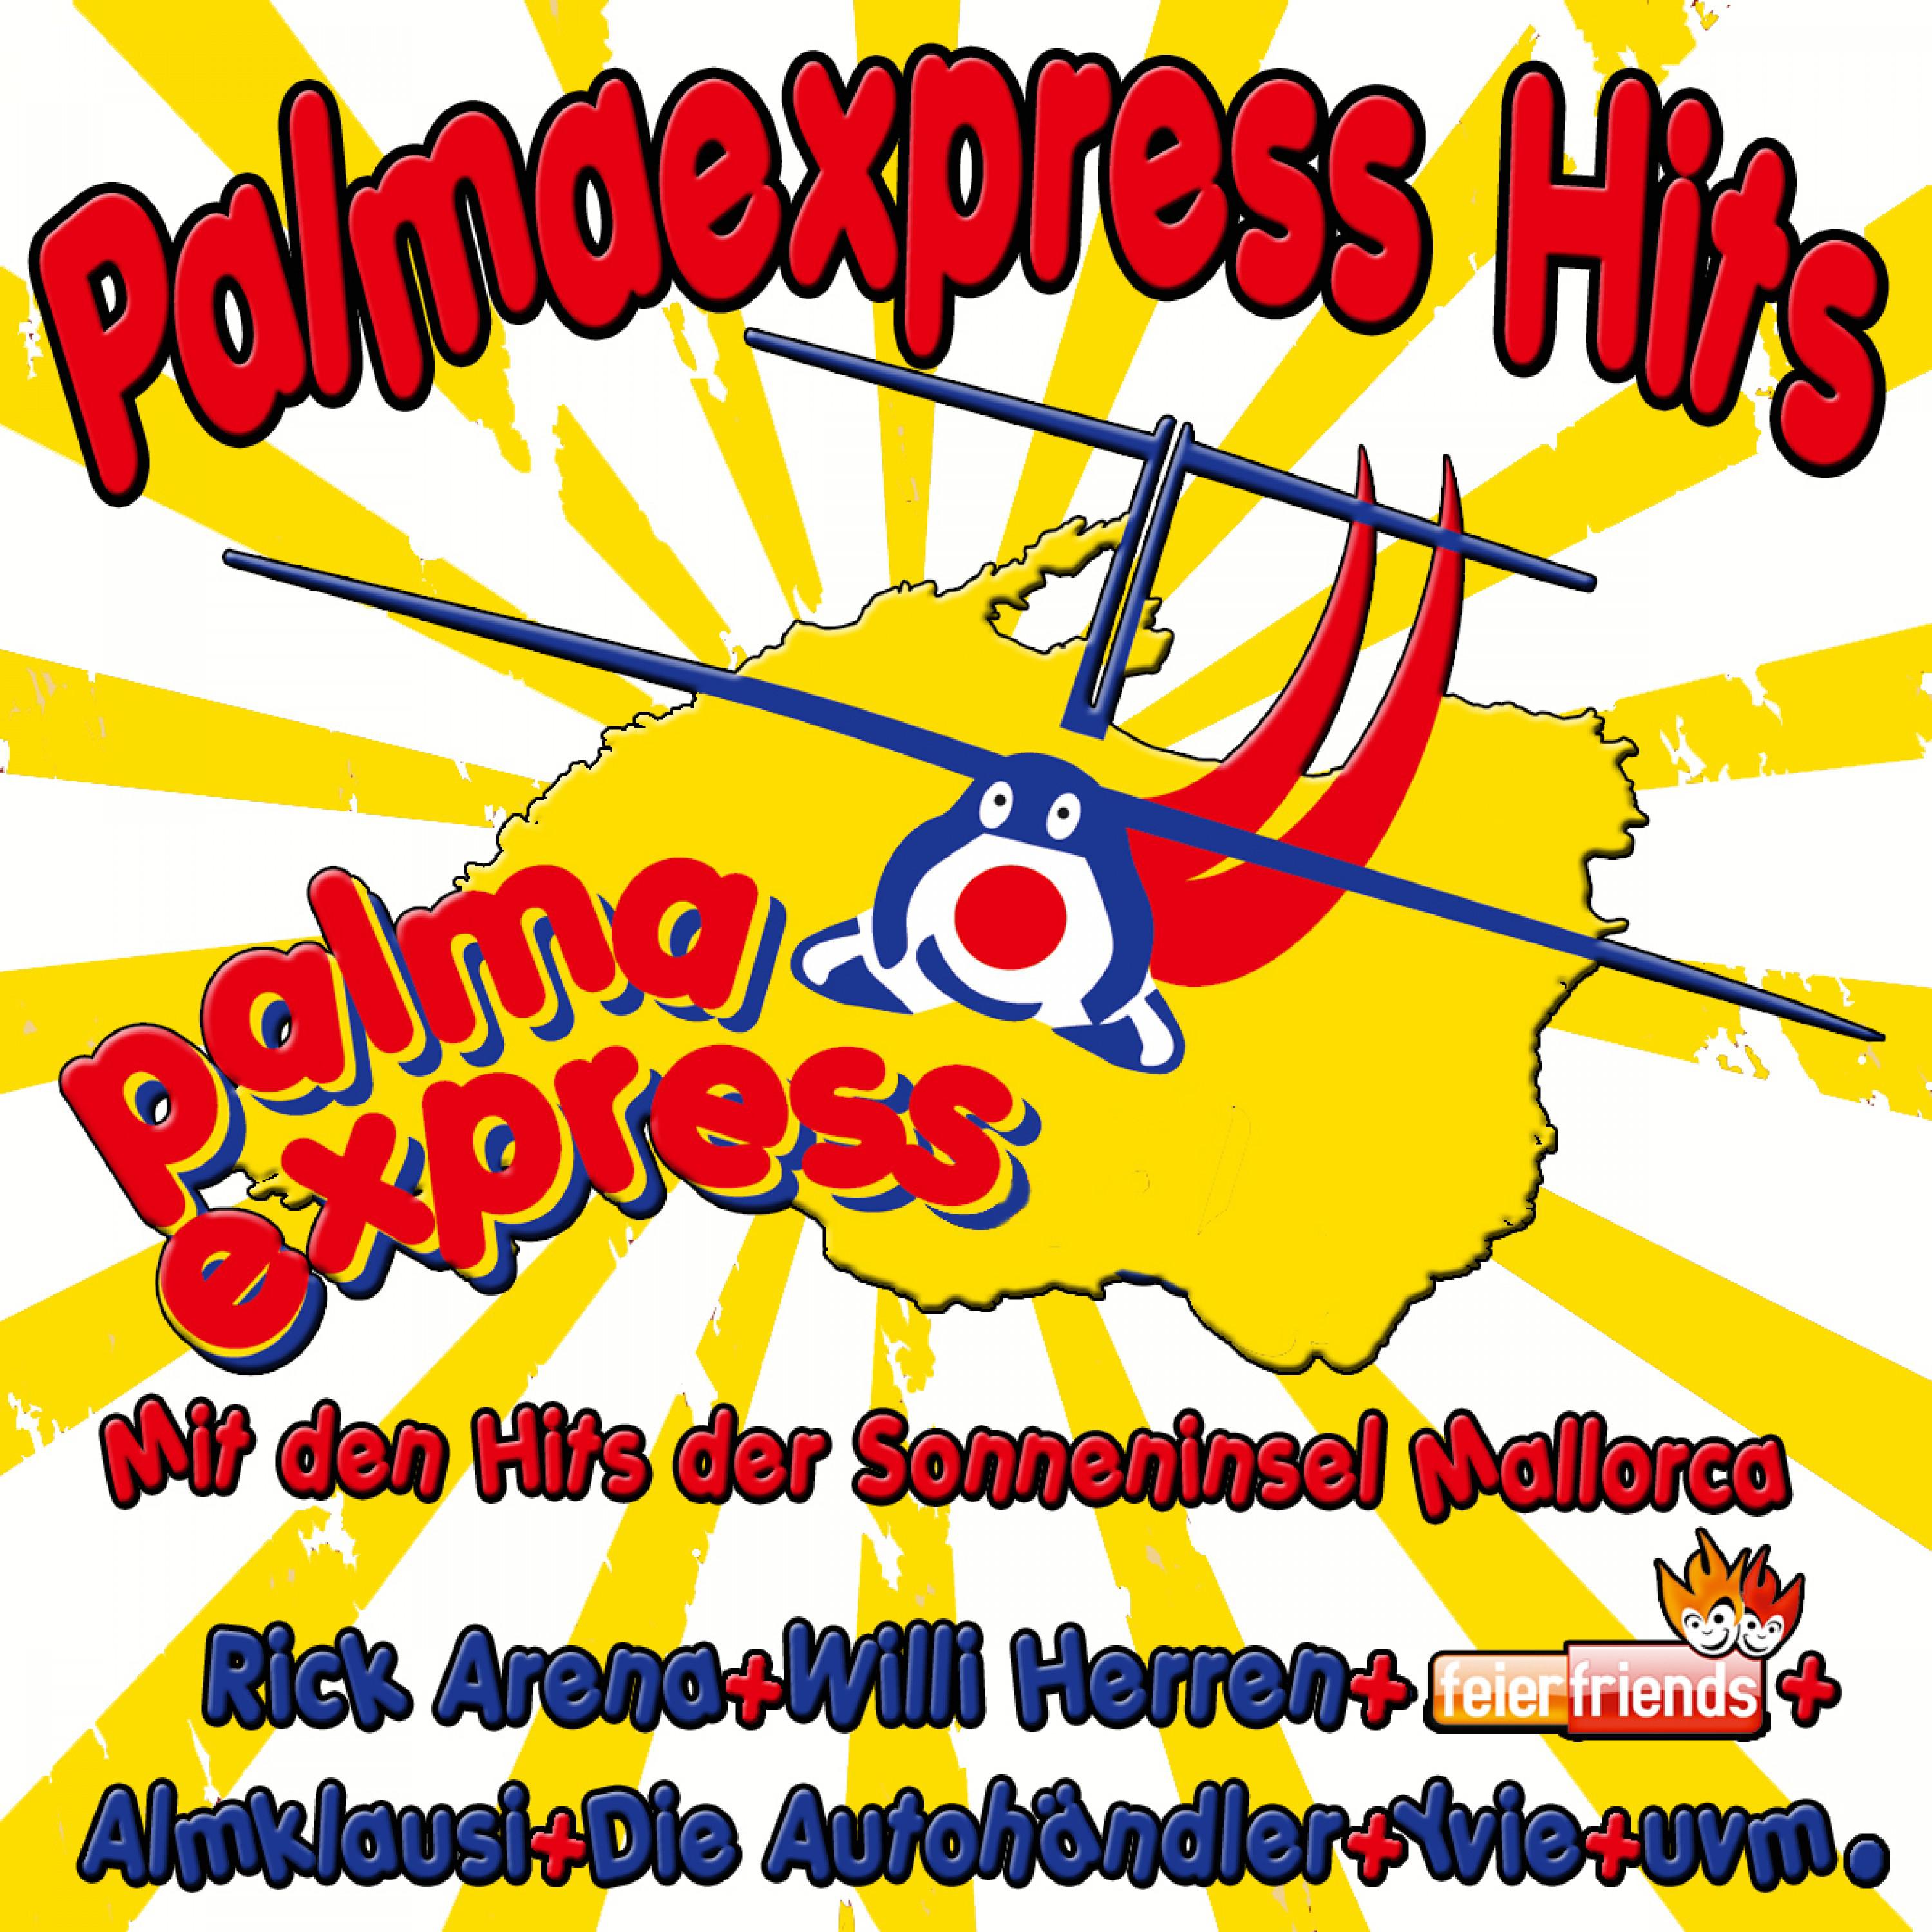 Palmaexpress Hits